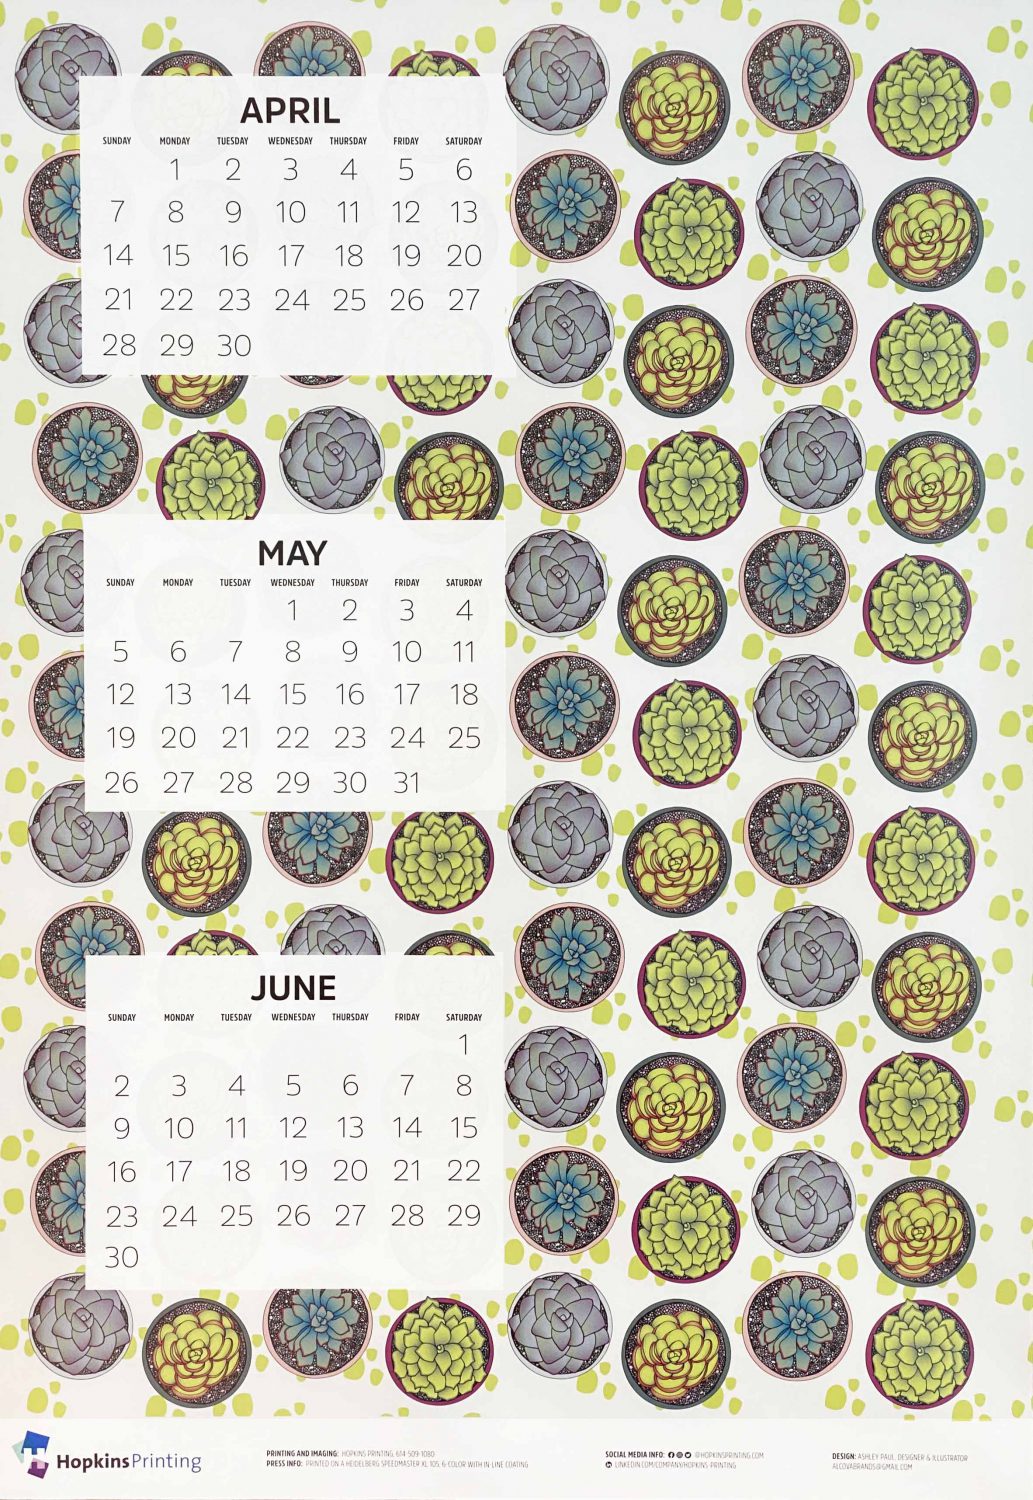 Hopkins' Spring Calendars Through the Years » Hopkins Printing